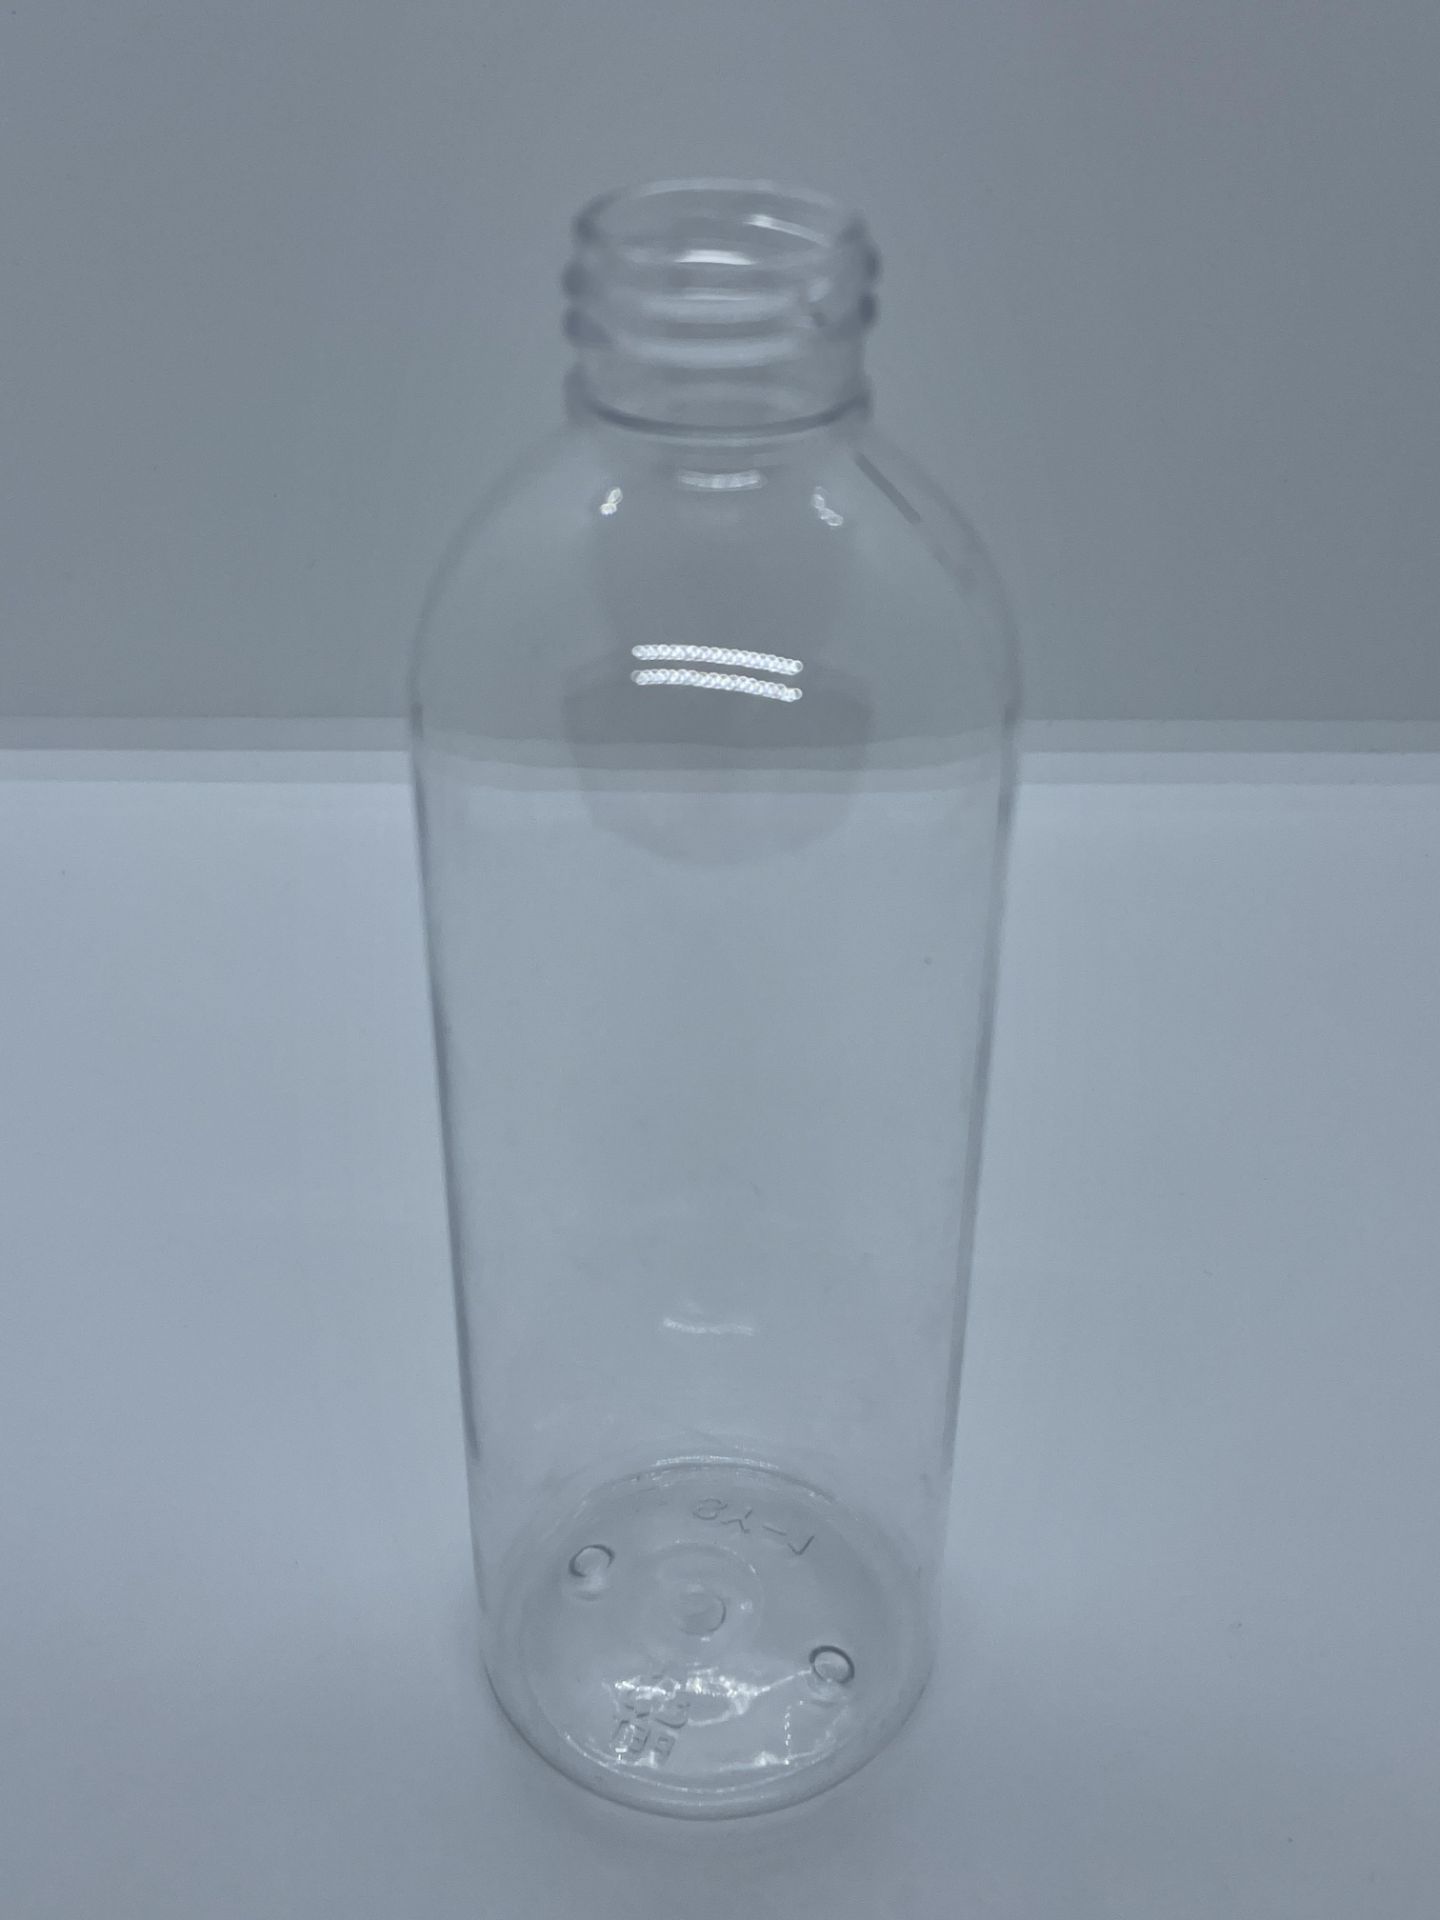 75,000 - Clear Plastic Bullet 8 oz Empty Bottles, 24-410 Threading Neck, 6.25" Tall, 2" Diameter - Image 7 of 10